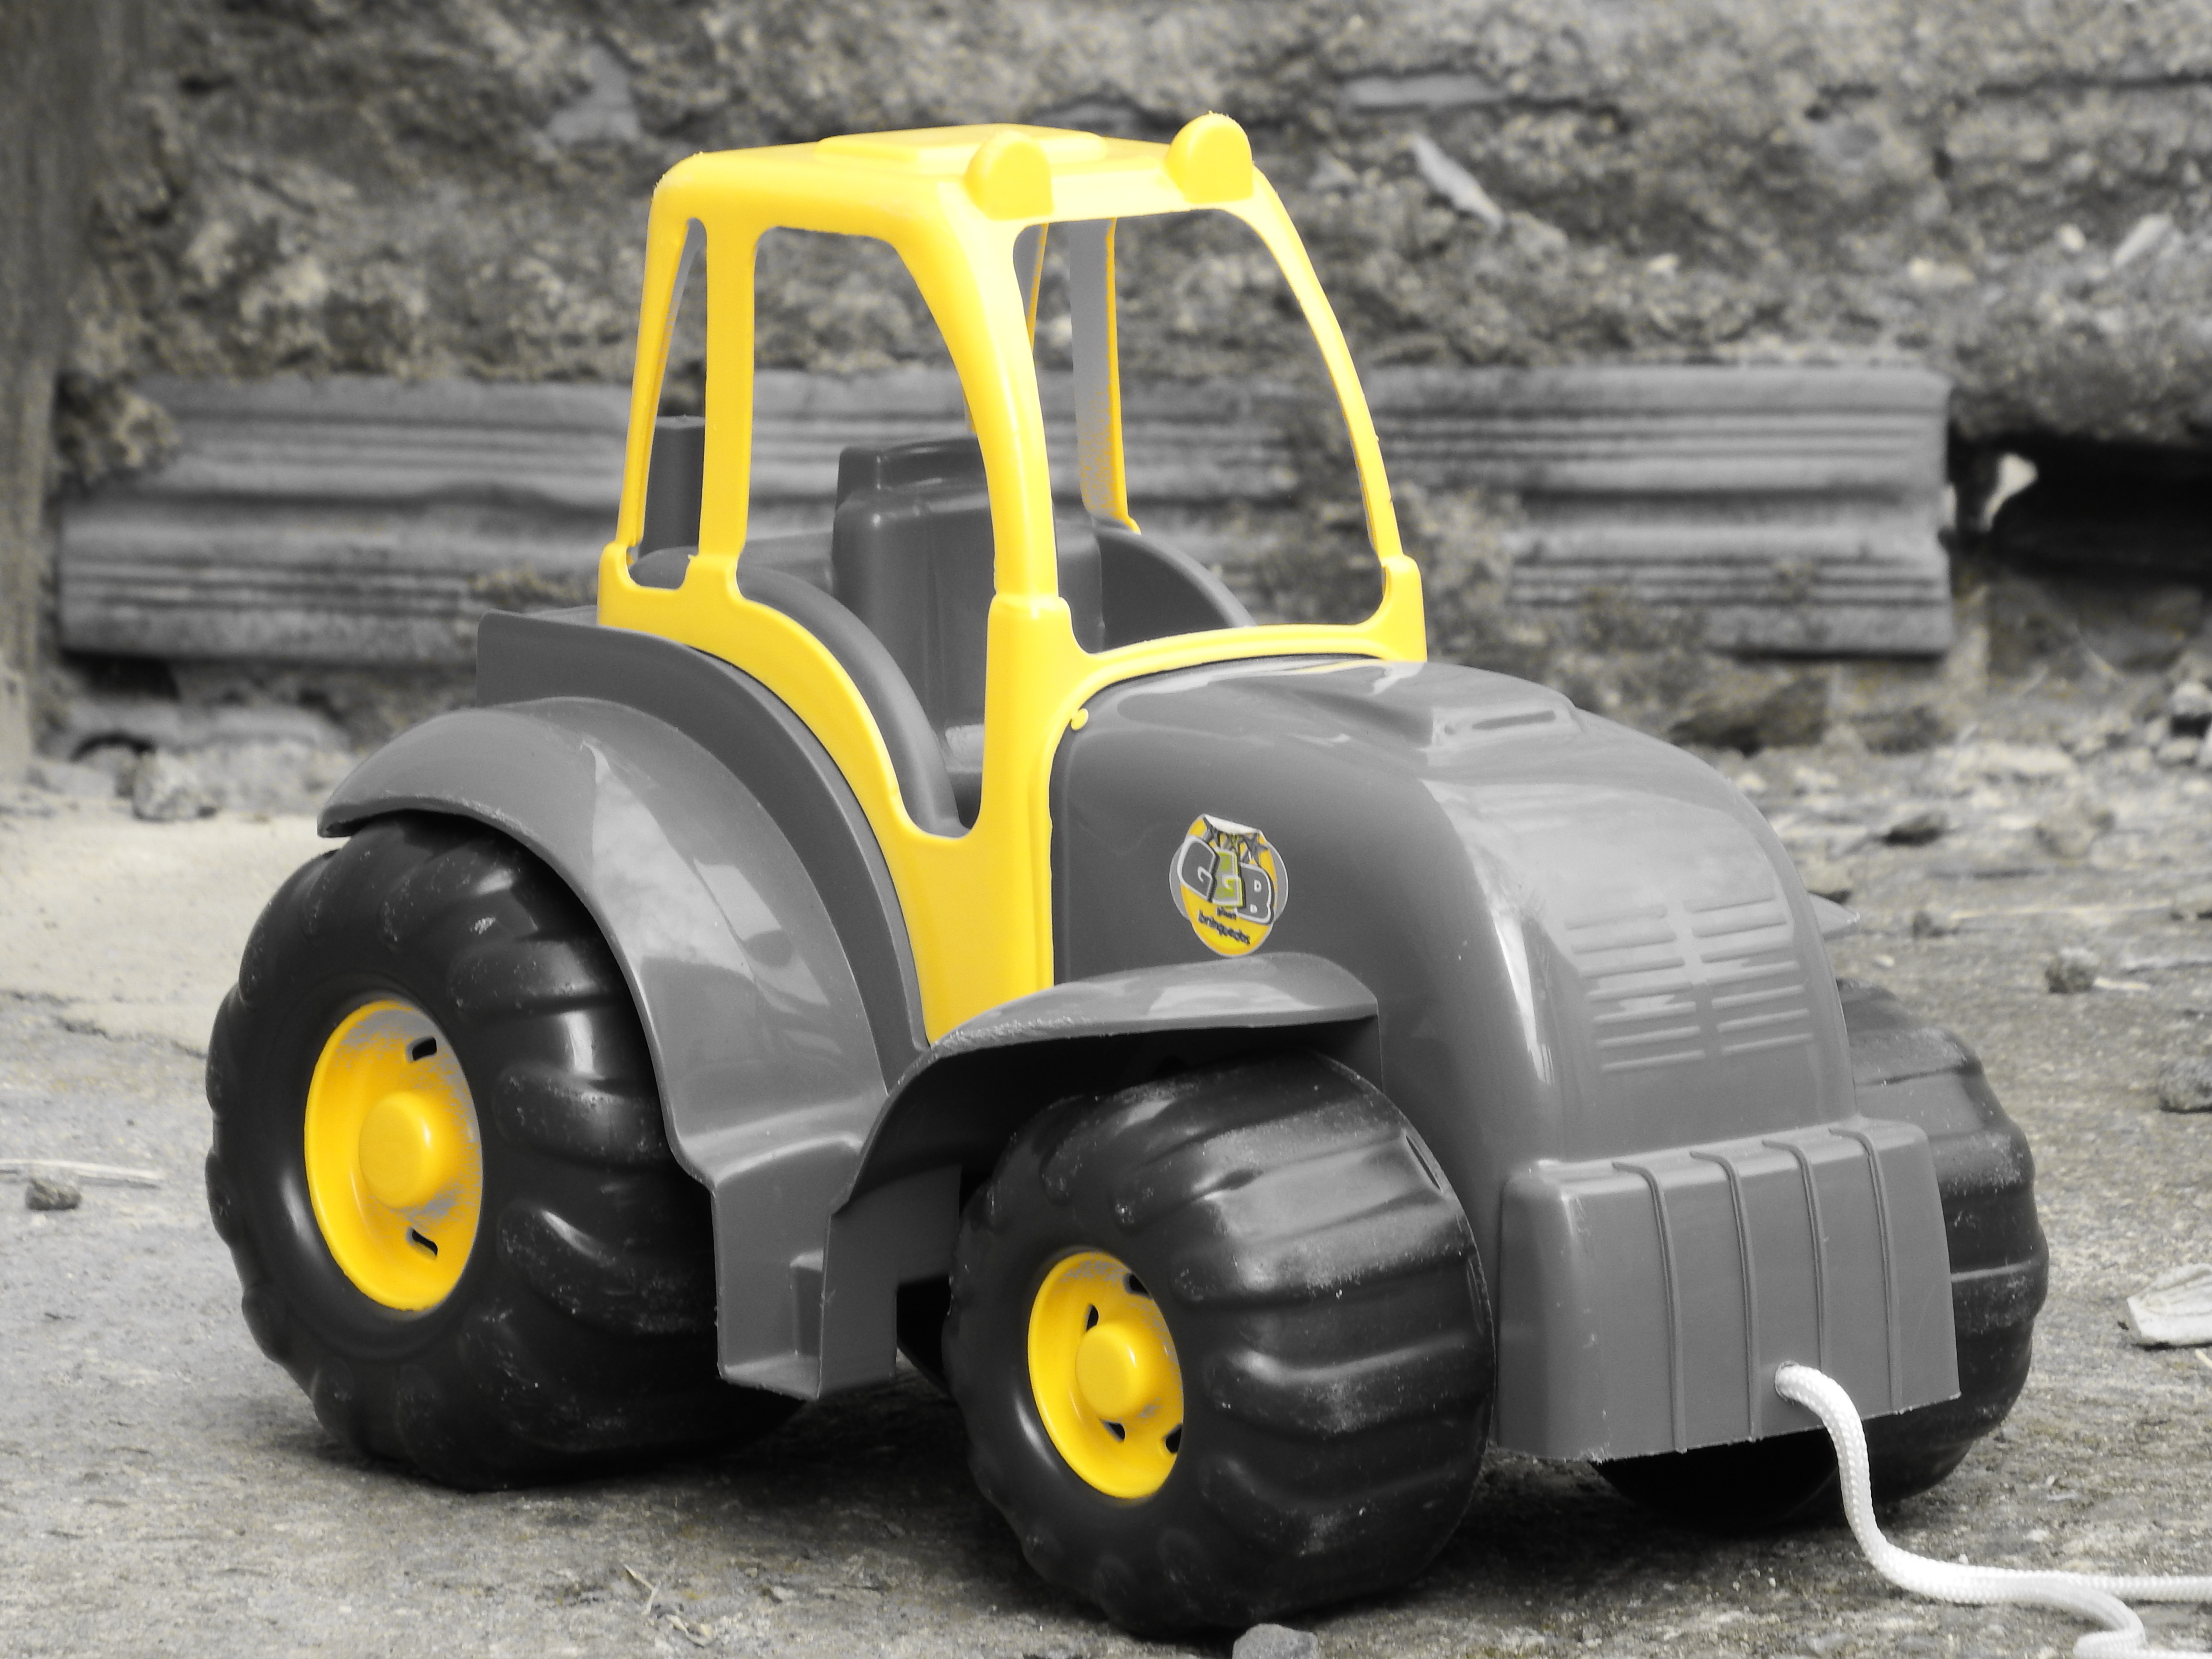 children's yellow and gray truck toy